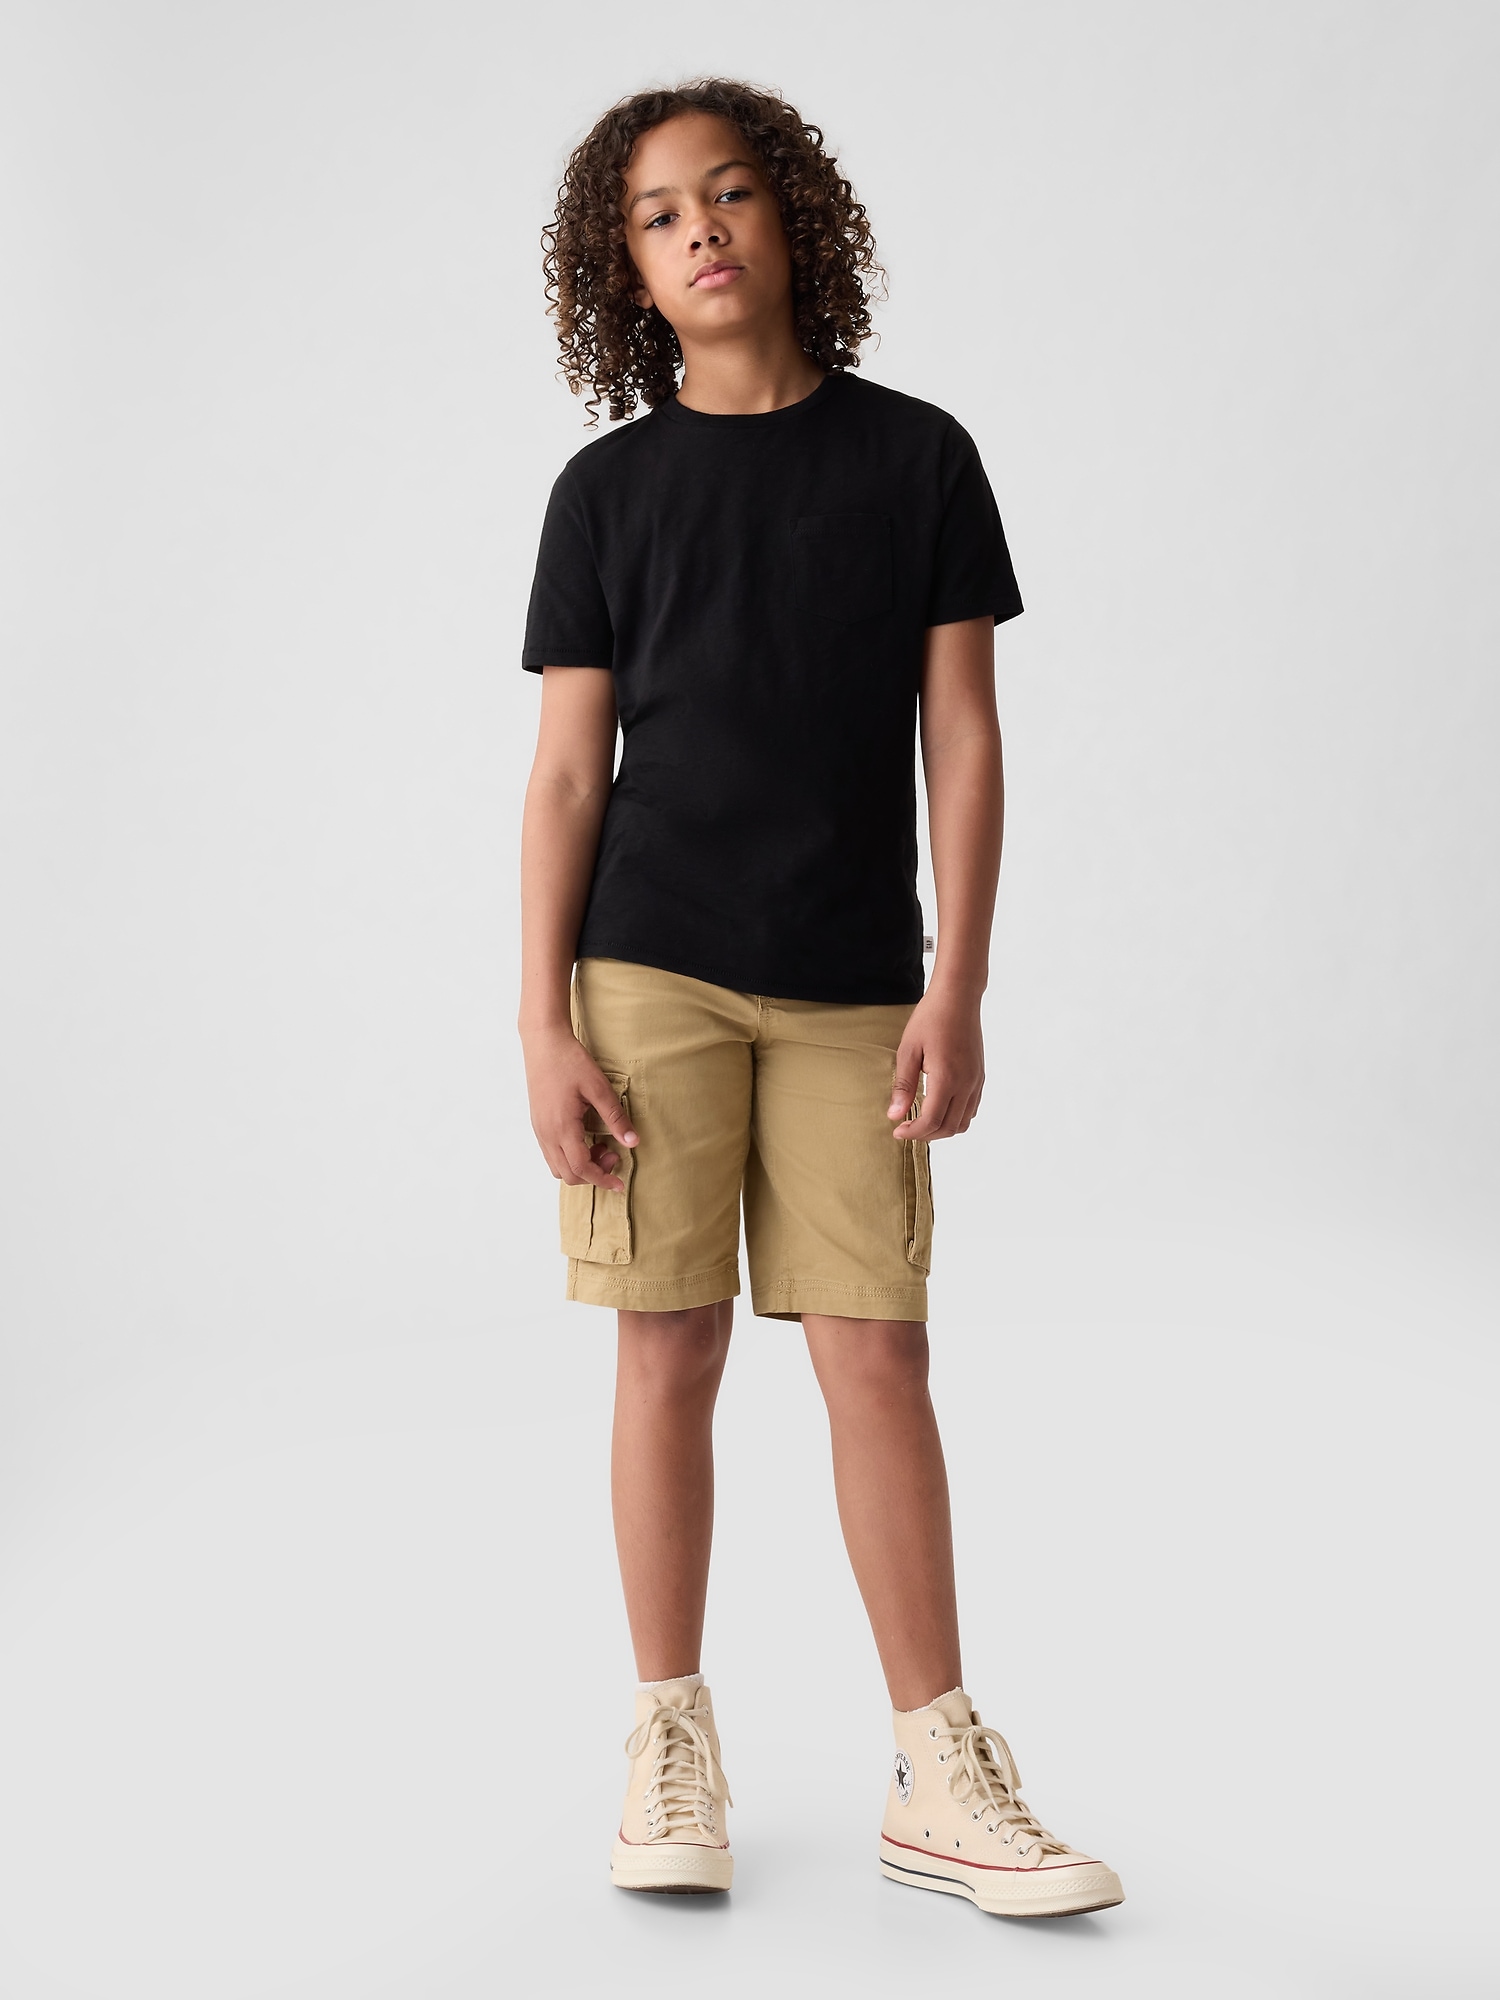 Columbia Sun Protection Shorts/Nike Dri-Fit/Gap Kids/Adidas Kids Shorts  (New & Used)($8-$20)